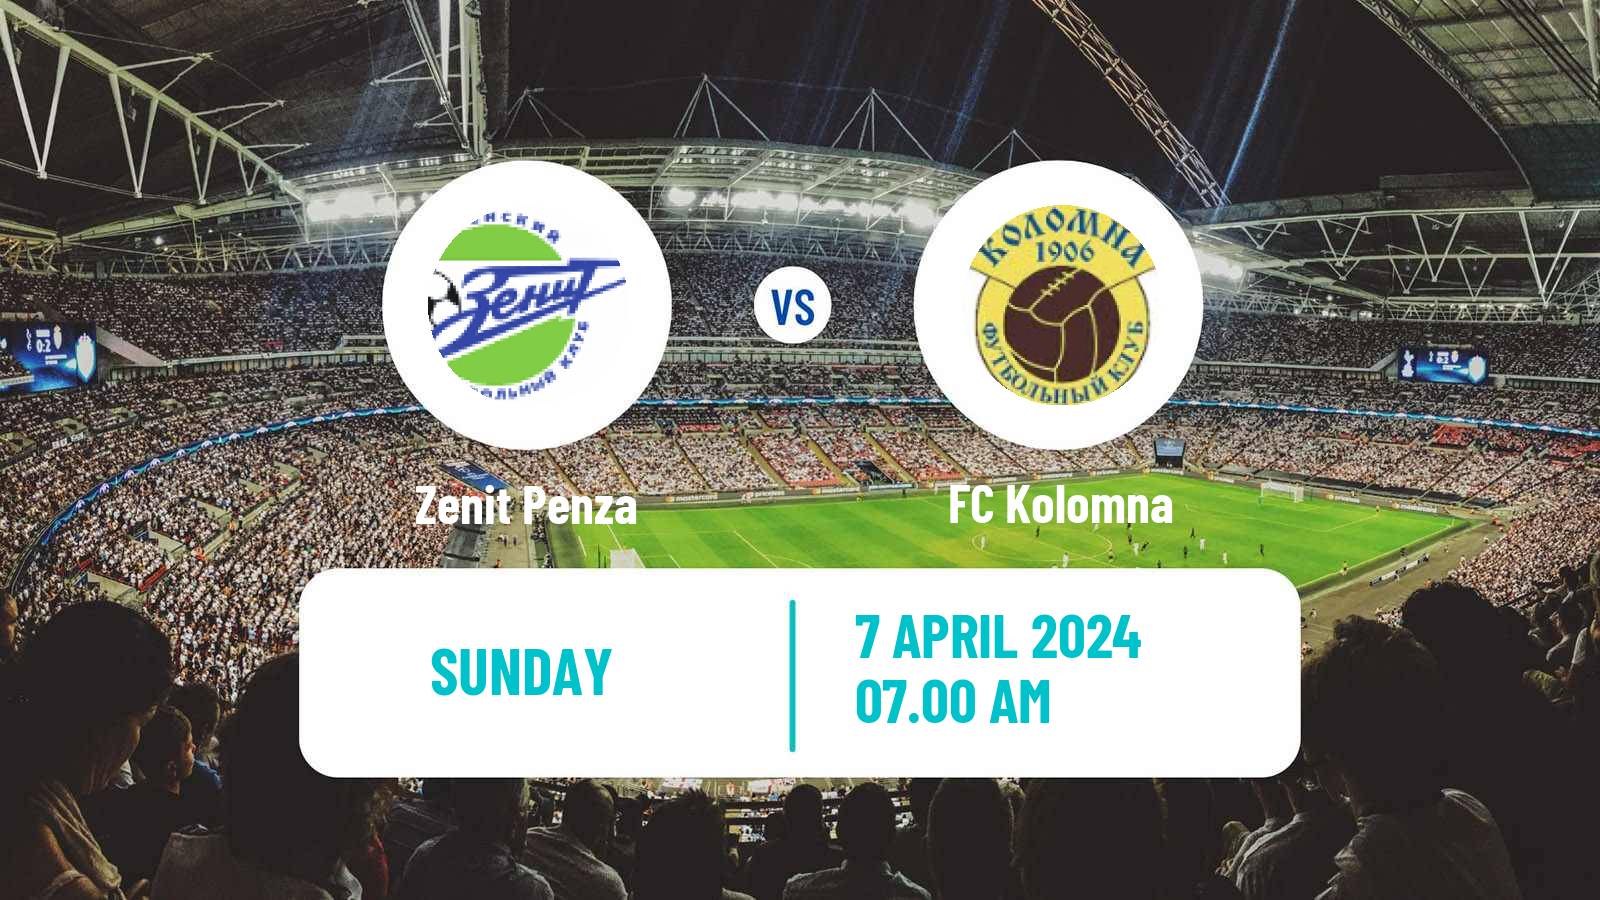 Soccer FNL 2 Division B Group 3 Zenit Penza - Kolomna